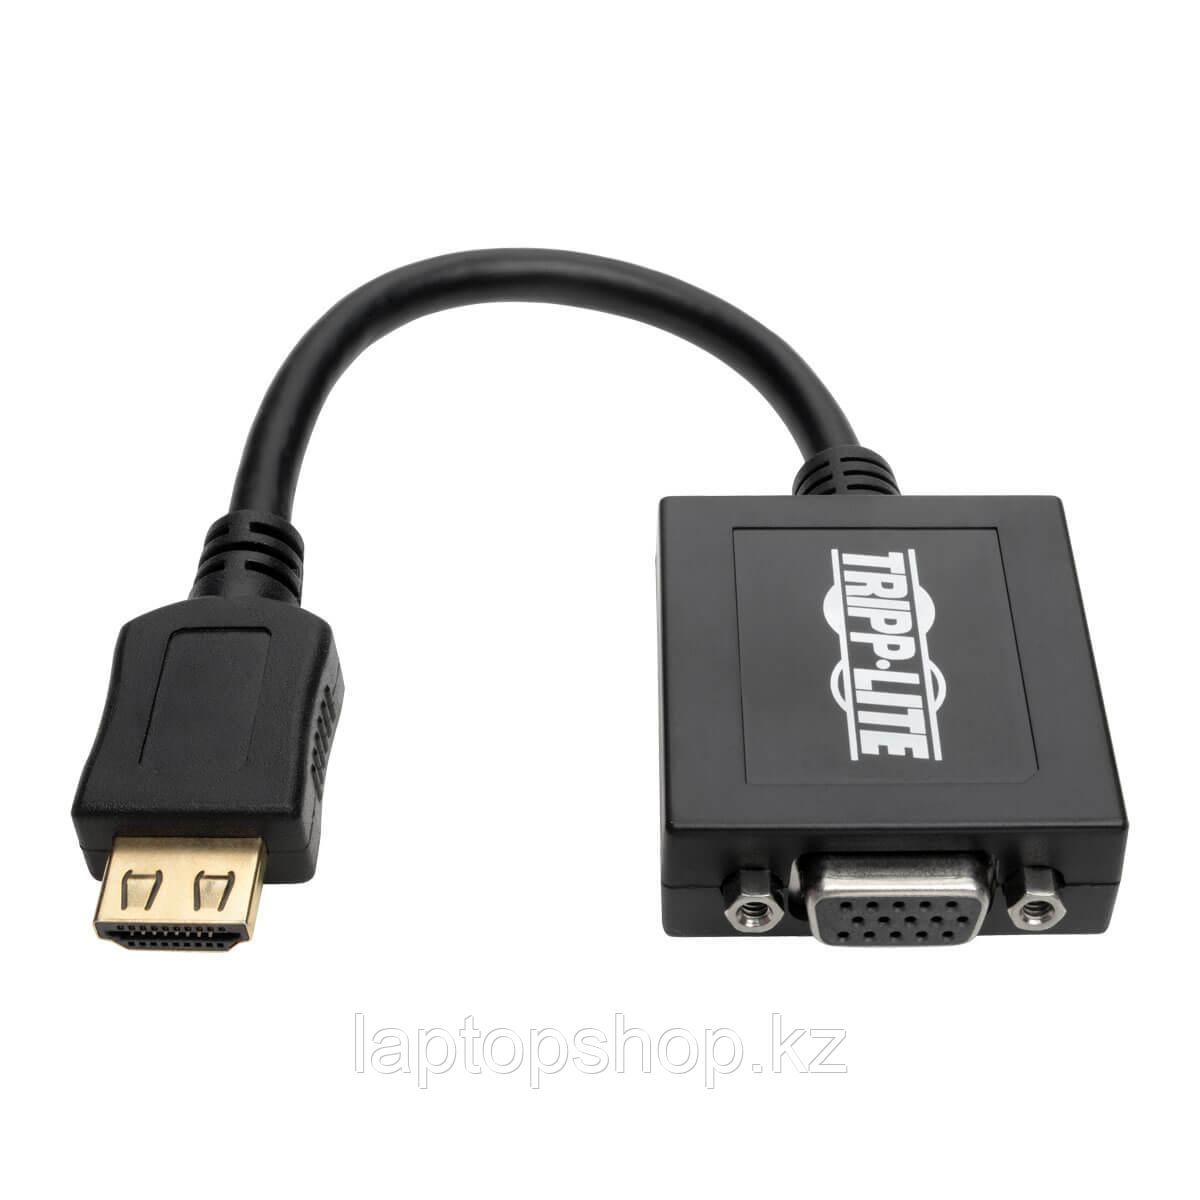 Конвертер (переходник) TrippLite HDMI to VGA with Audio Converter Cable Adapter